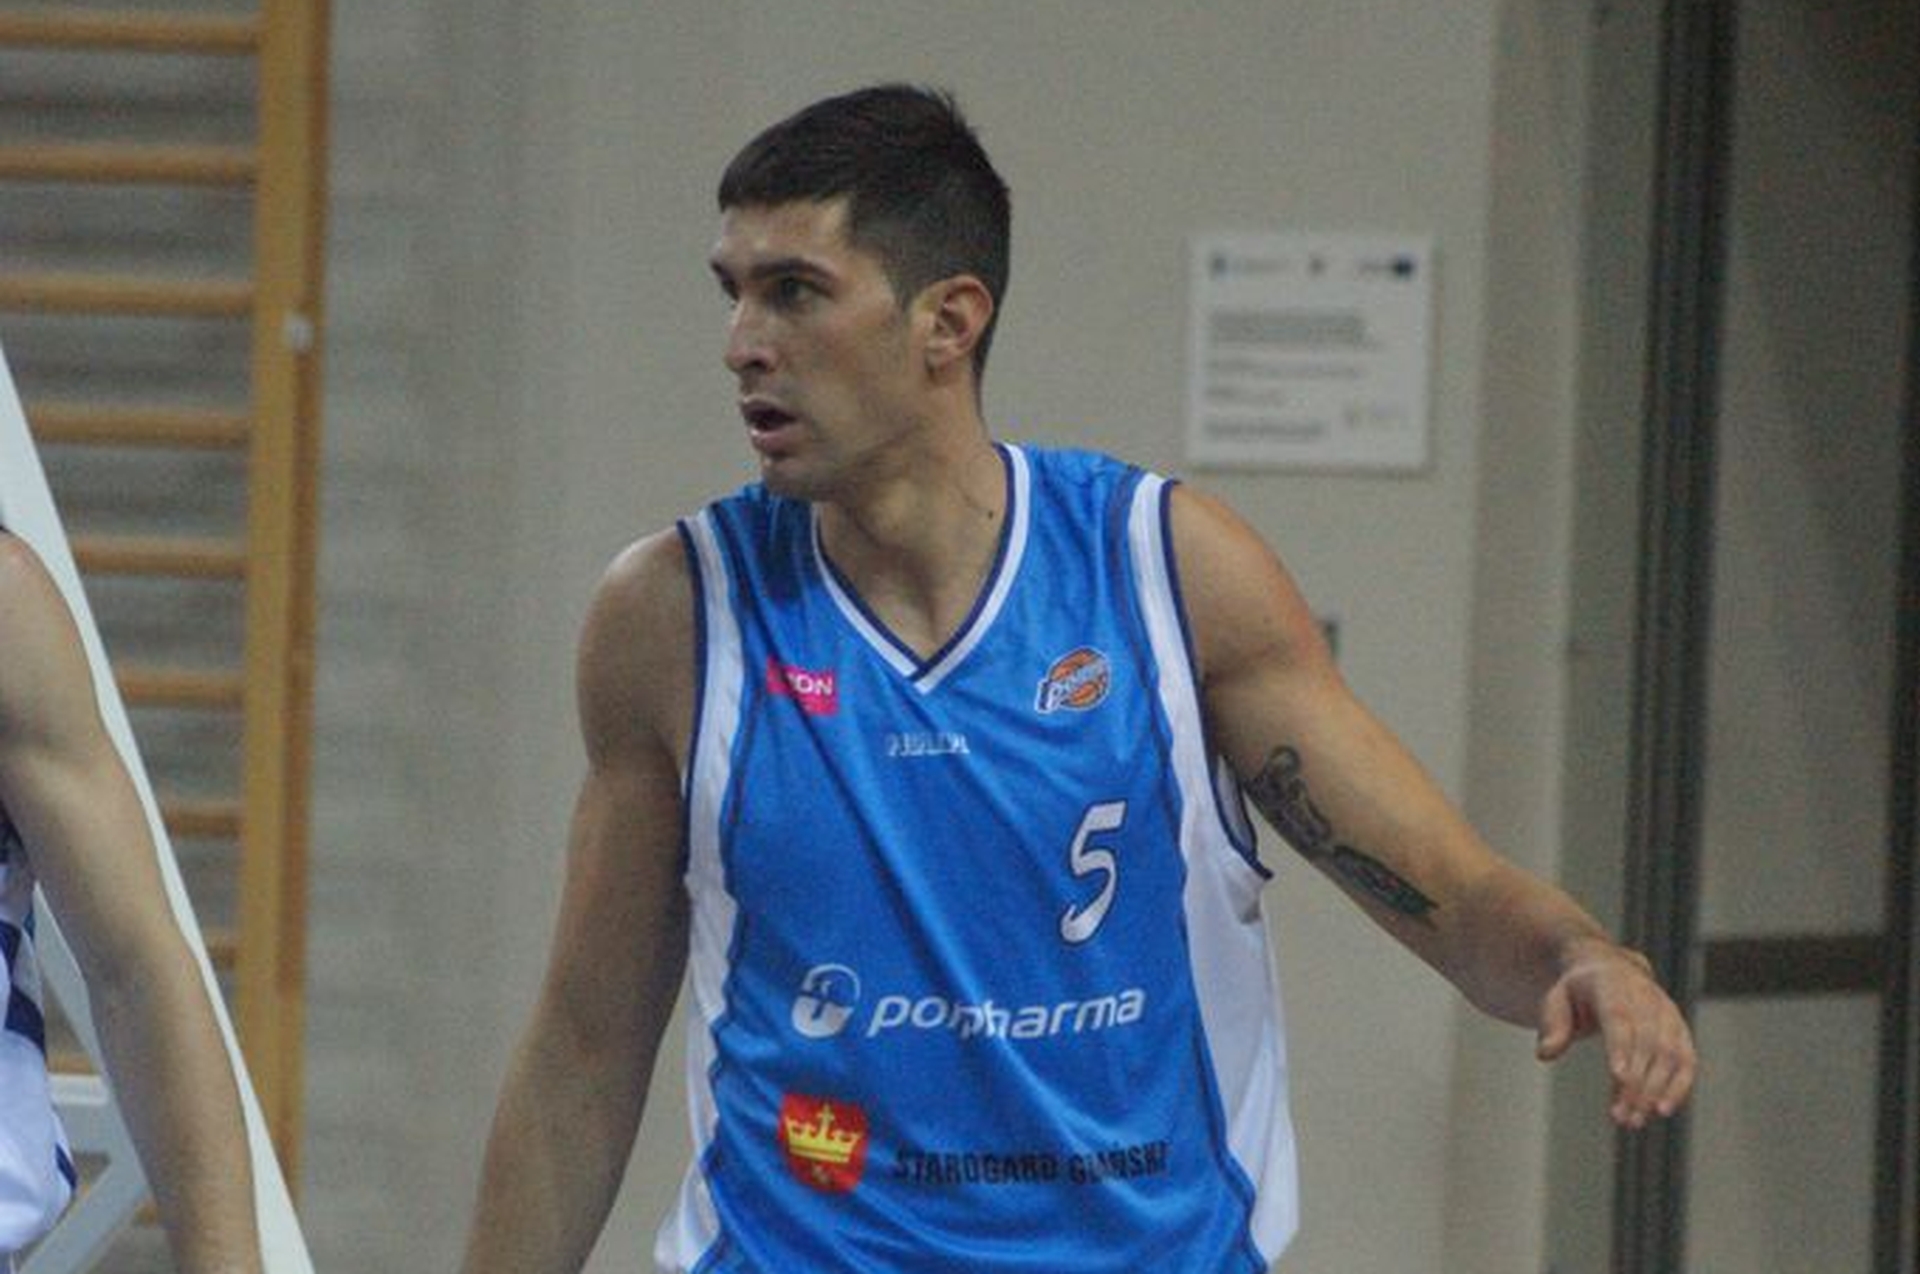 Nikola Jeftić